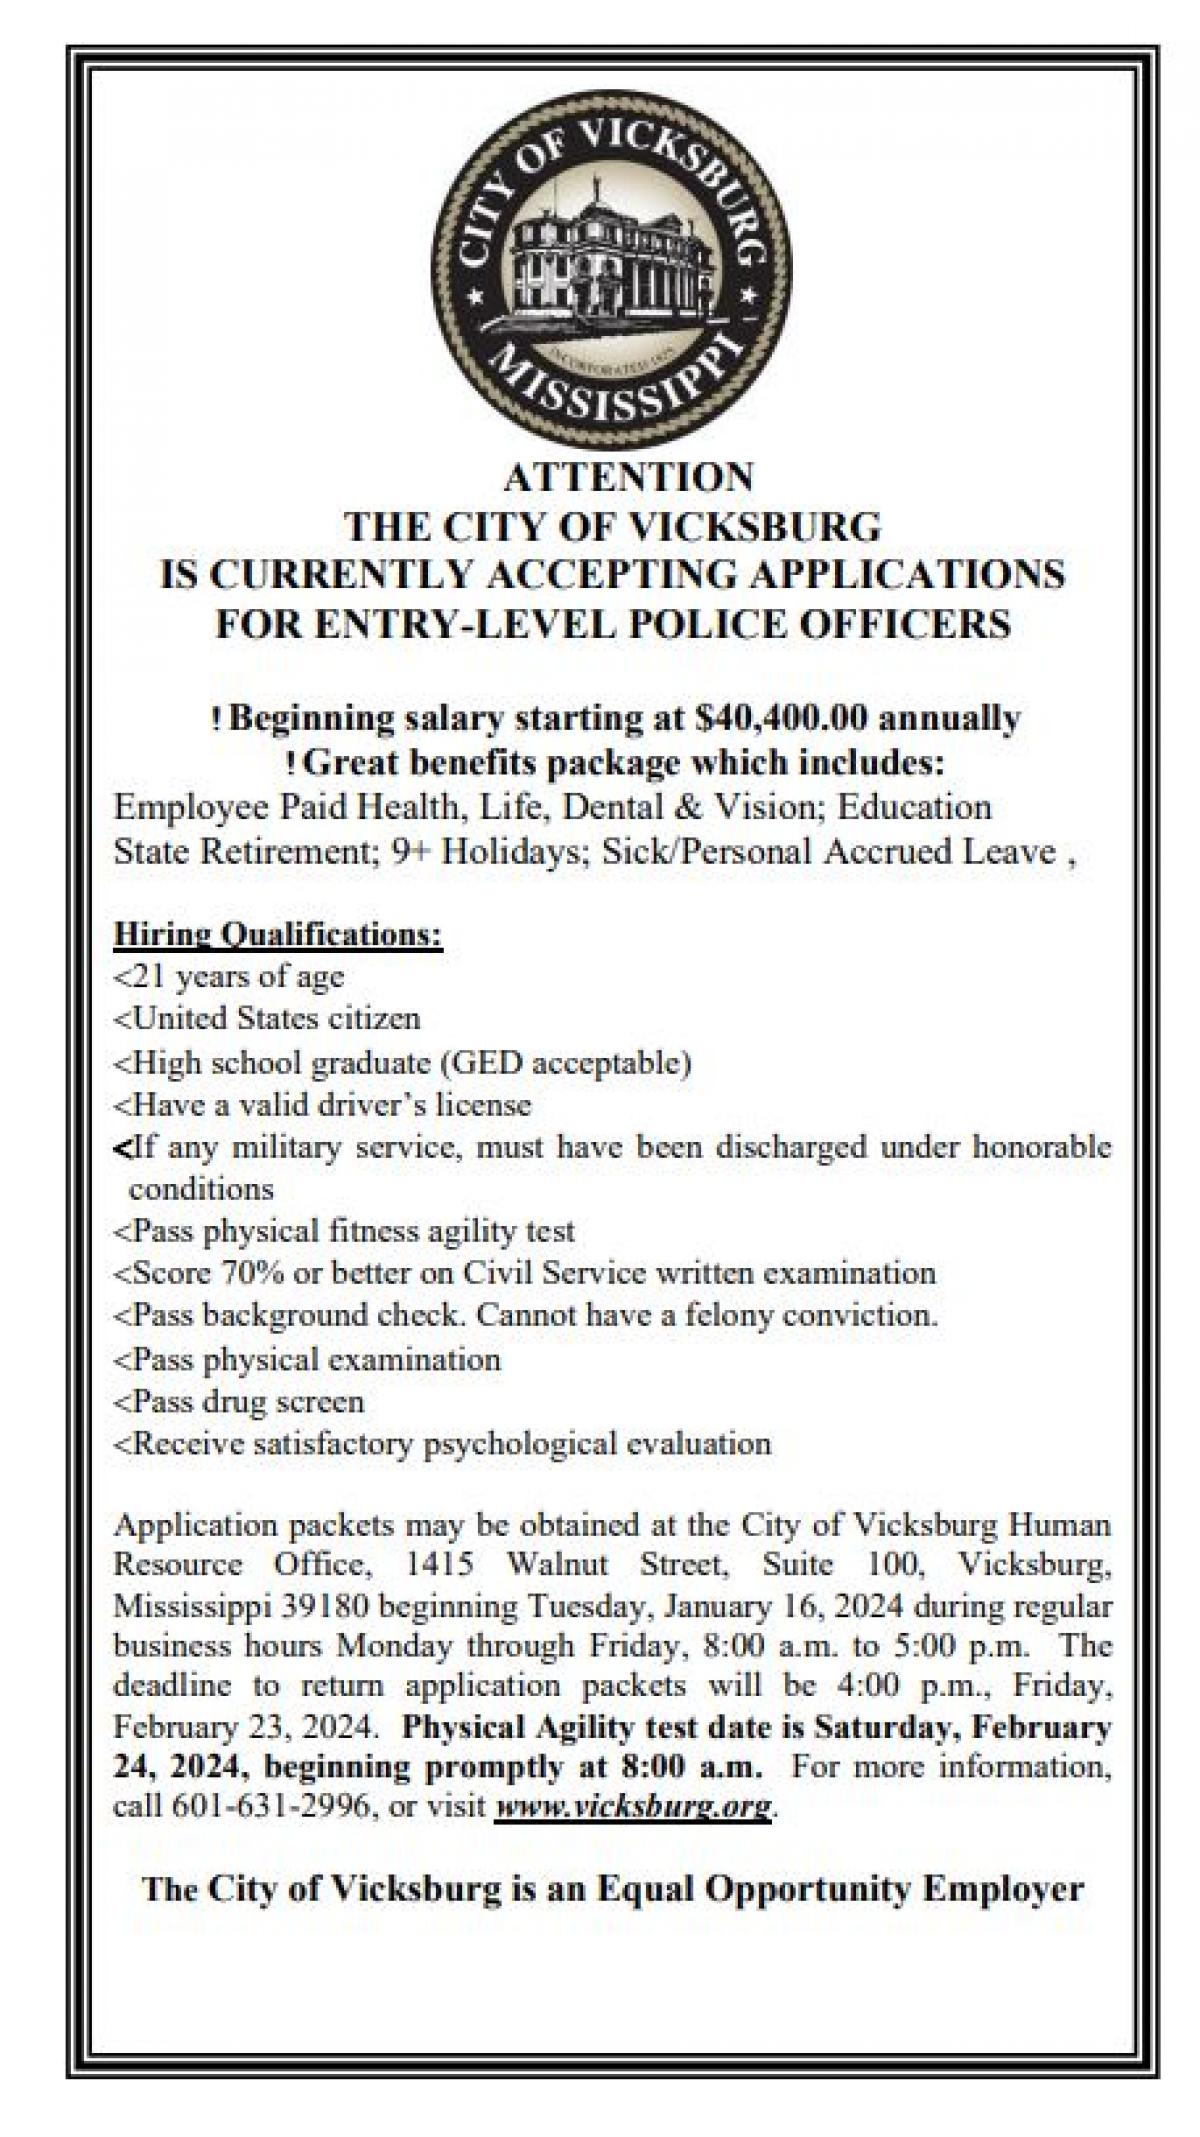 Officers needed - Vicksburg Police Department Feb 2024